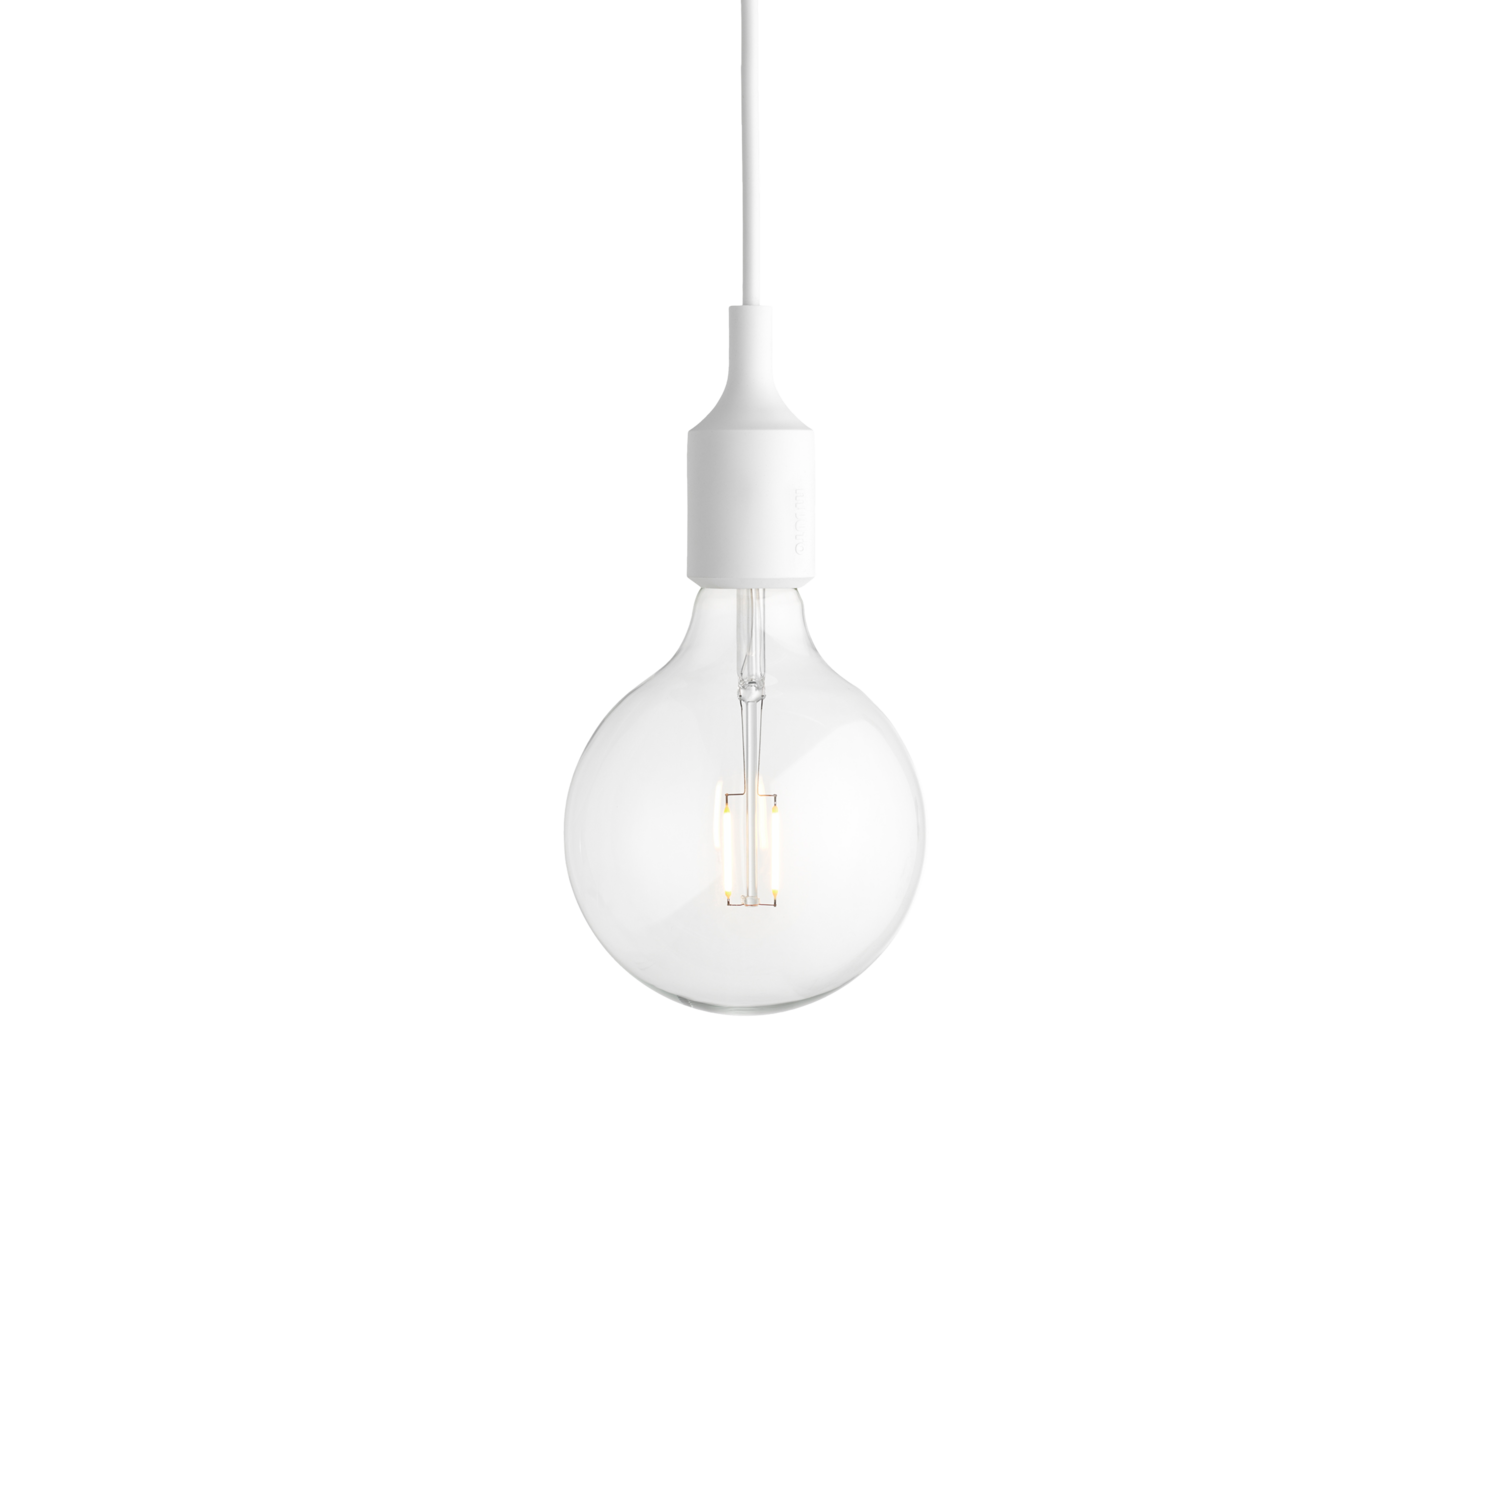 drie Vlek Junior E27 Pendant Lamp | Industrial style lamp that suits your needs